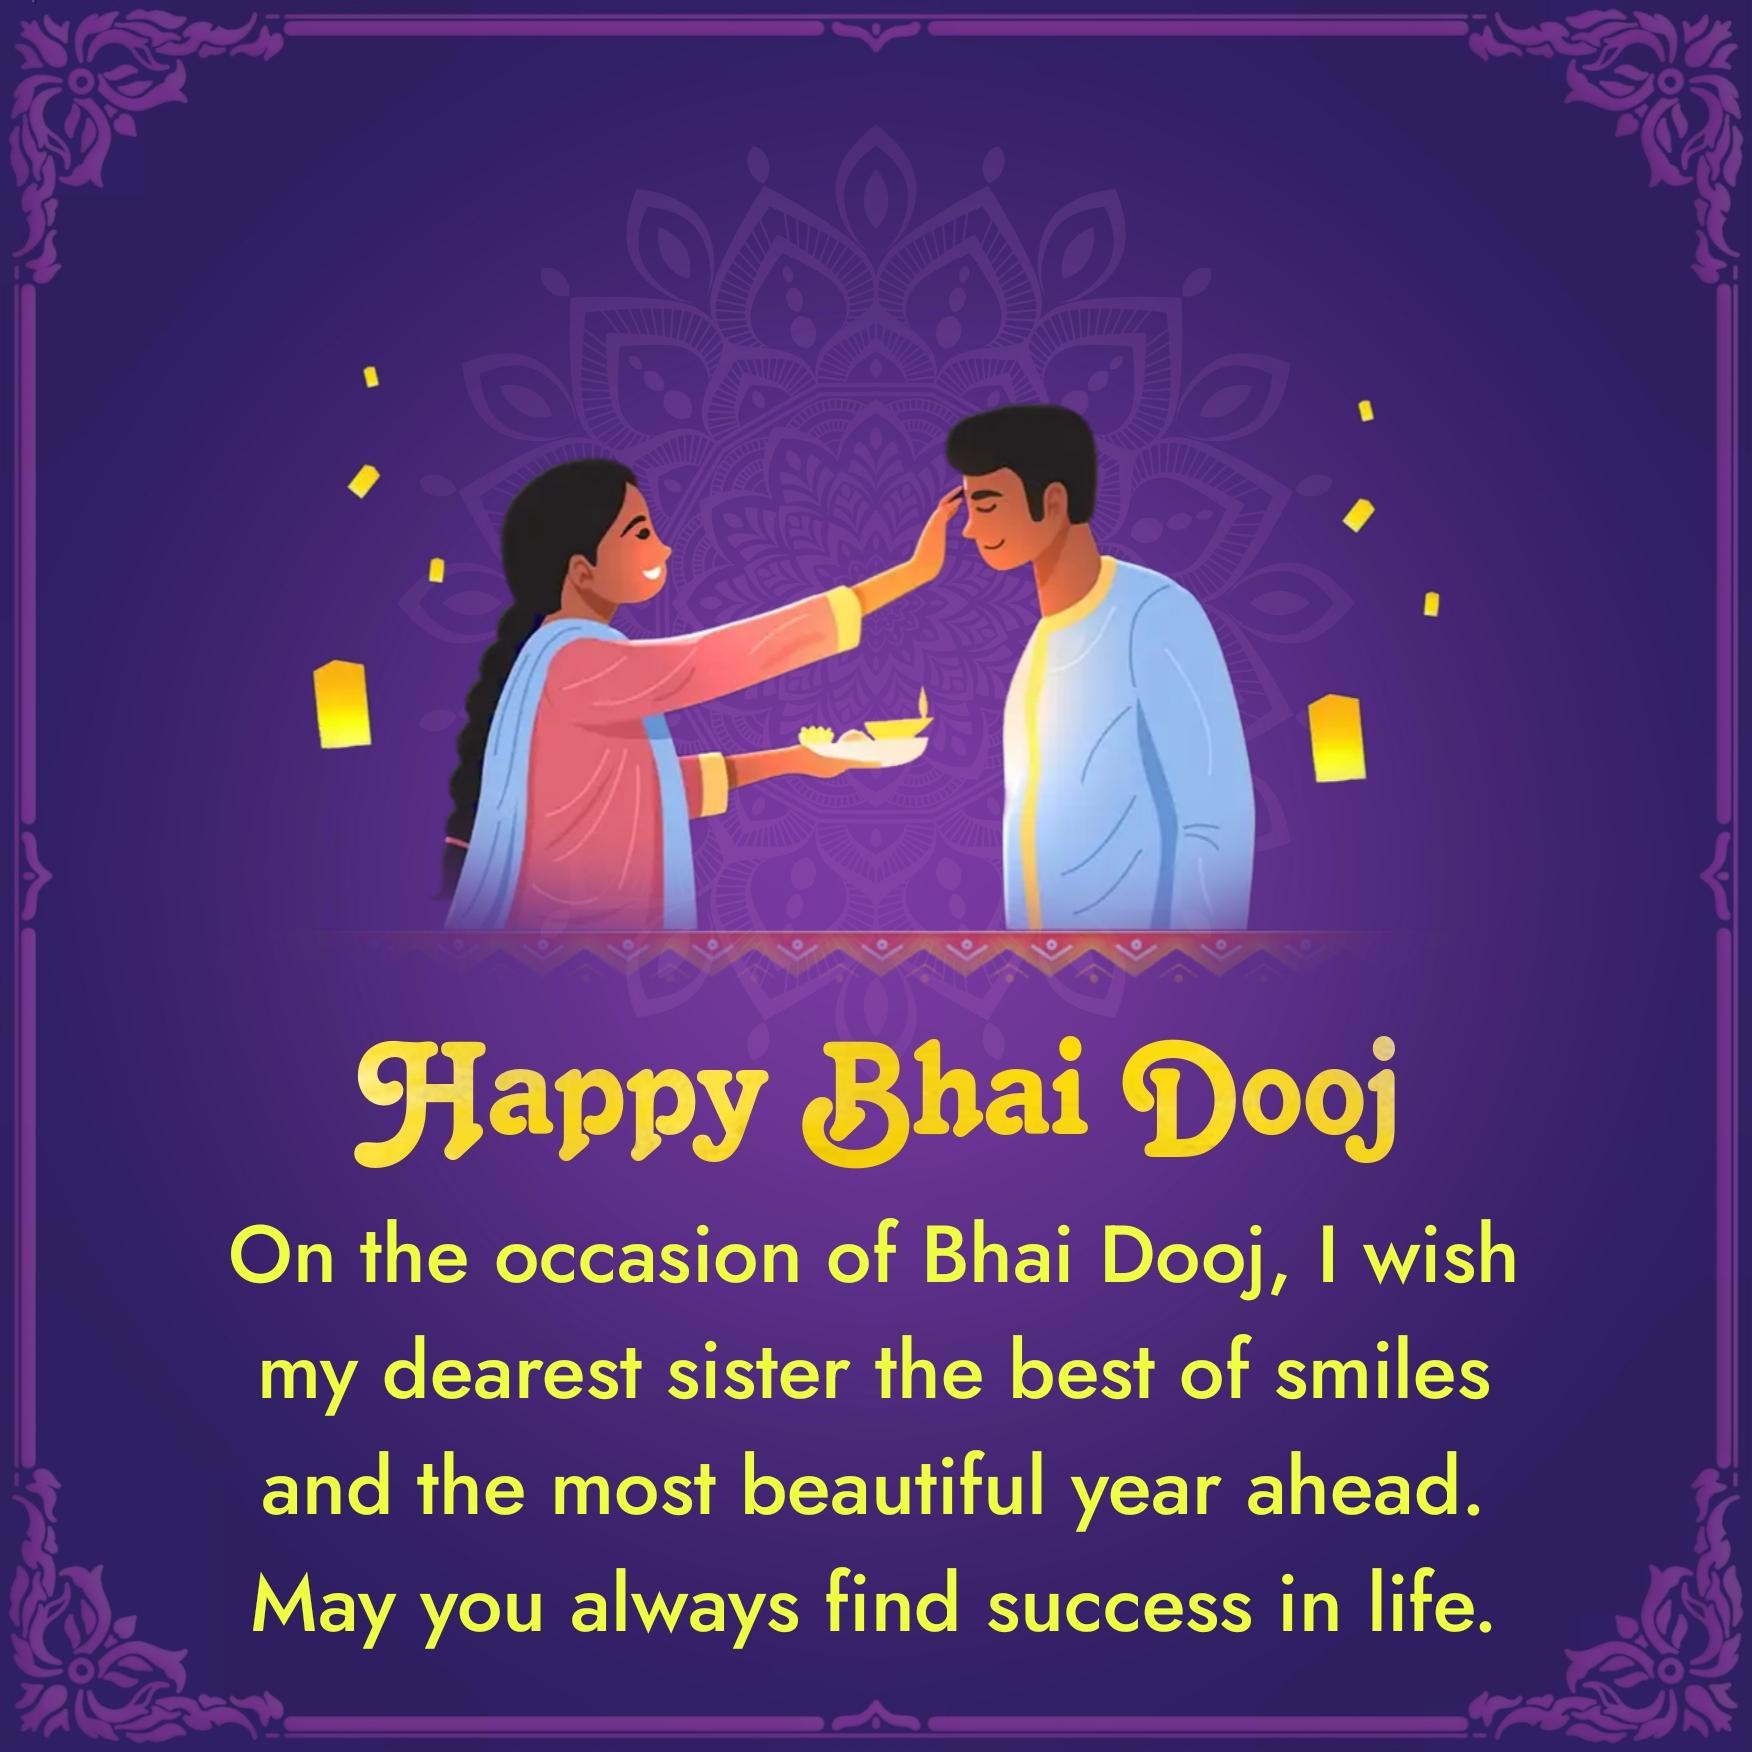 On the occasion of Bhai Dooj I wish my dearest sister